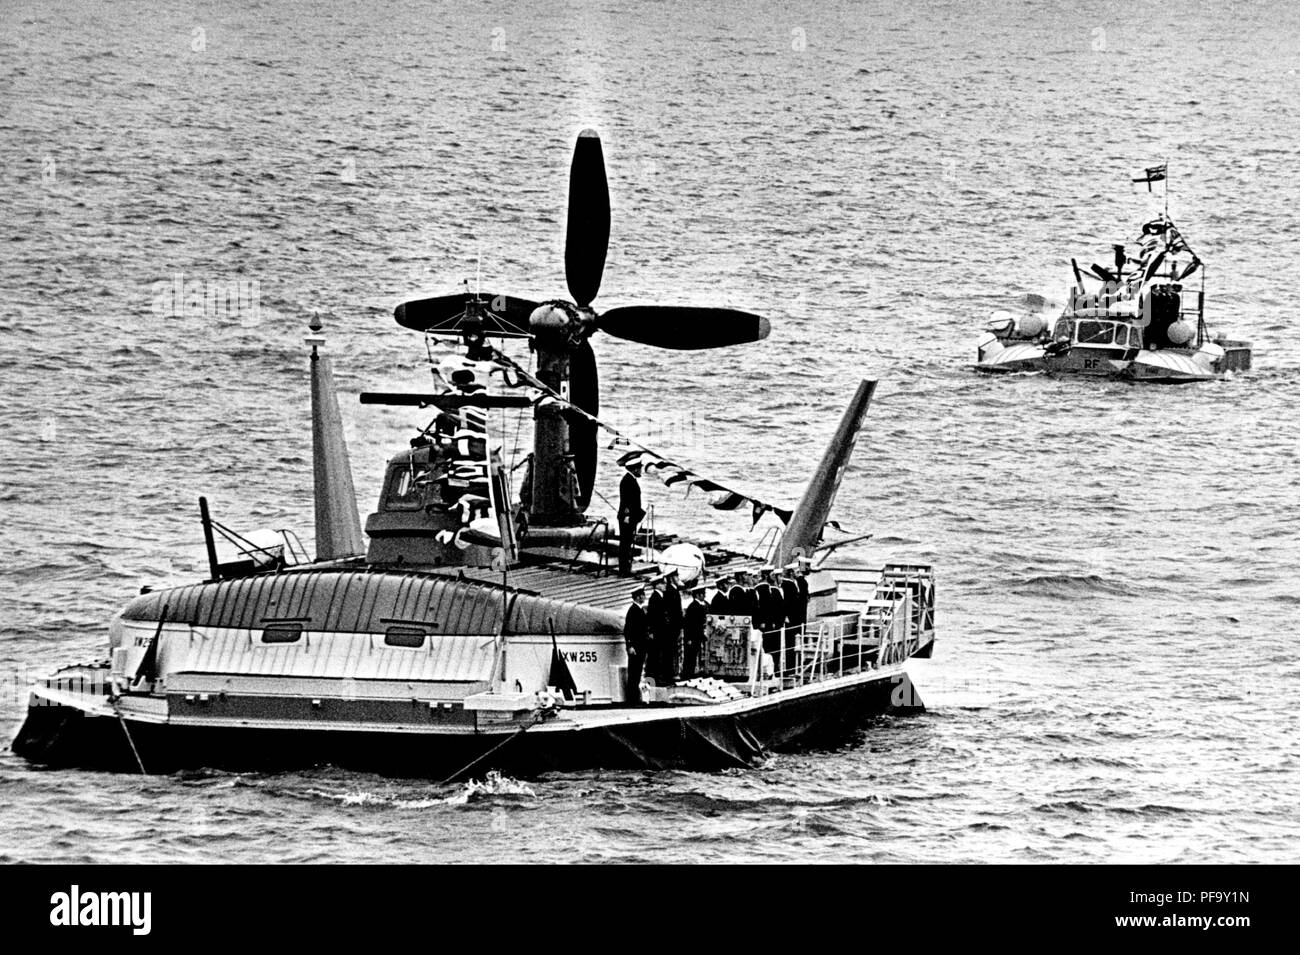 AJAX NEWS FOTO. 1977. SPITHEAD, Inghilterra. - HOVERCRAFT - ROYAL NAVY hovercraft sperimentale squadrone visto durante il 1977 Silver Jubilee revisione della flotta. Foto:JONATHAN EASTLAND/AJAX REF:SJR 77 Foto Stock